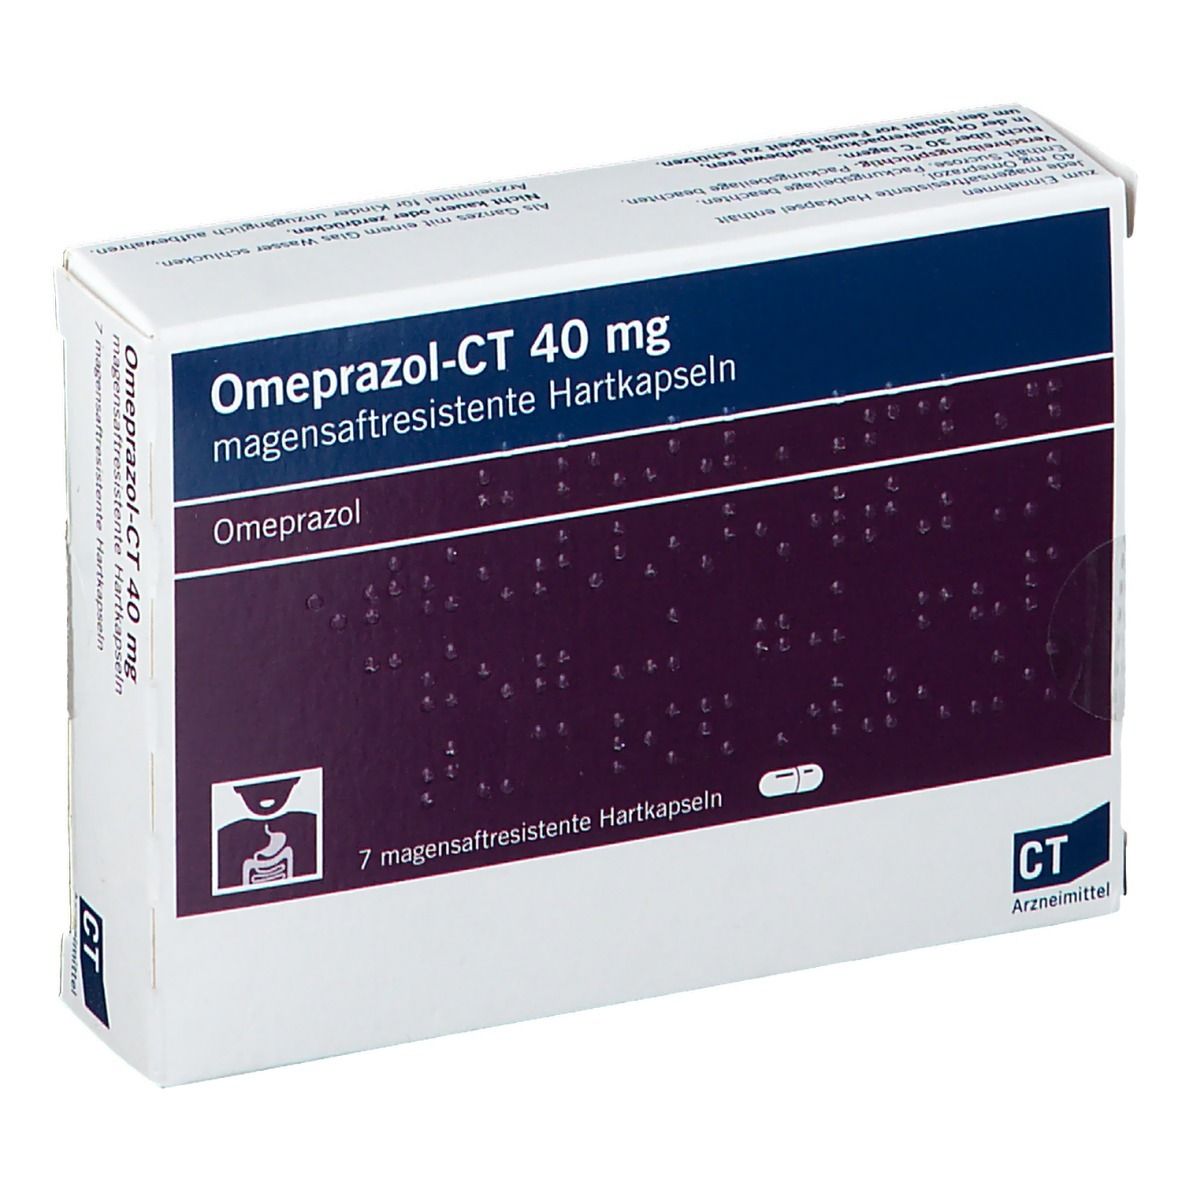 Omeprazol-CT 40 mg